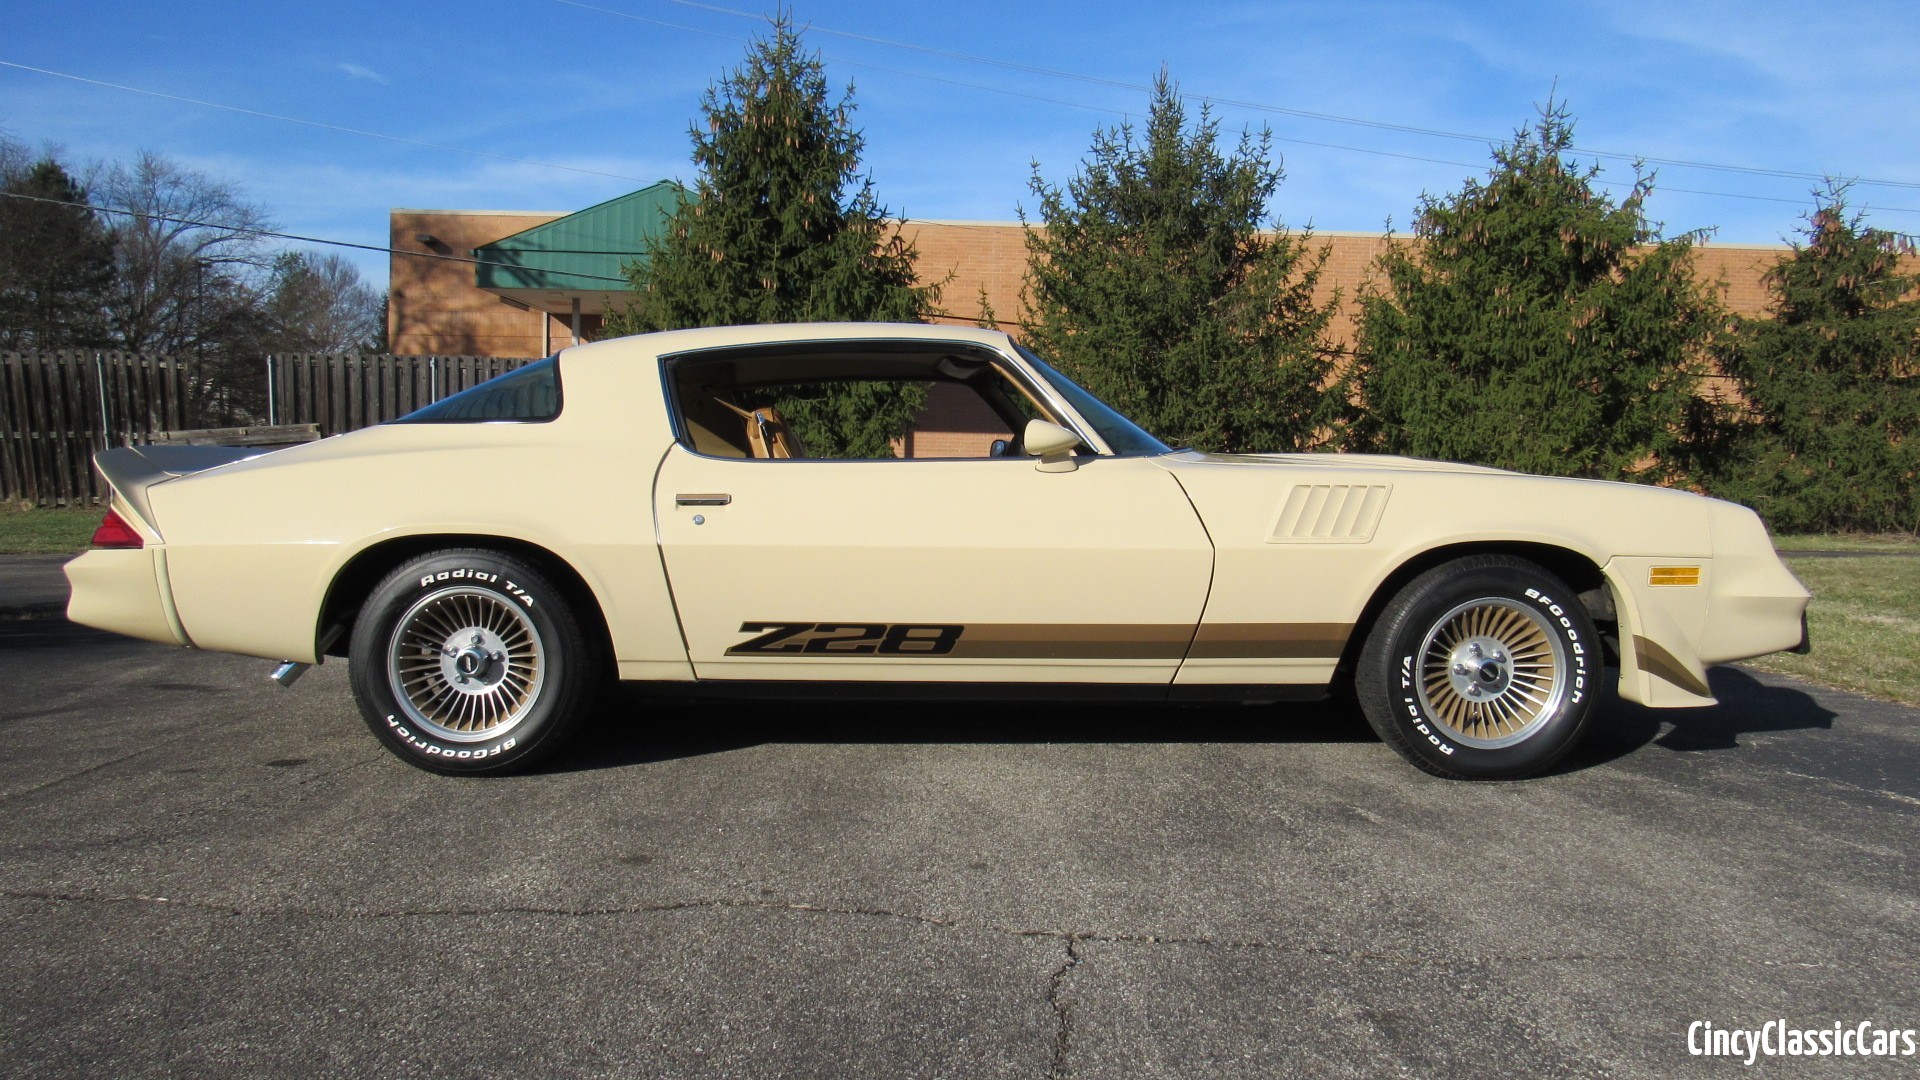 1979 Camaro Z28, 90K Miles, Excellent Beige Paint, Restored, SOLD!